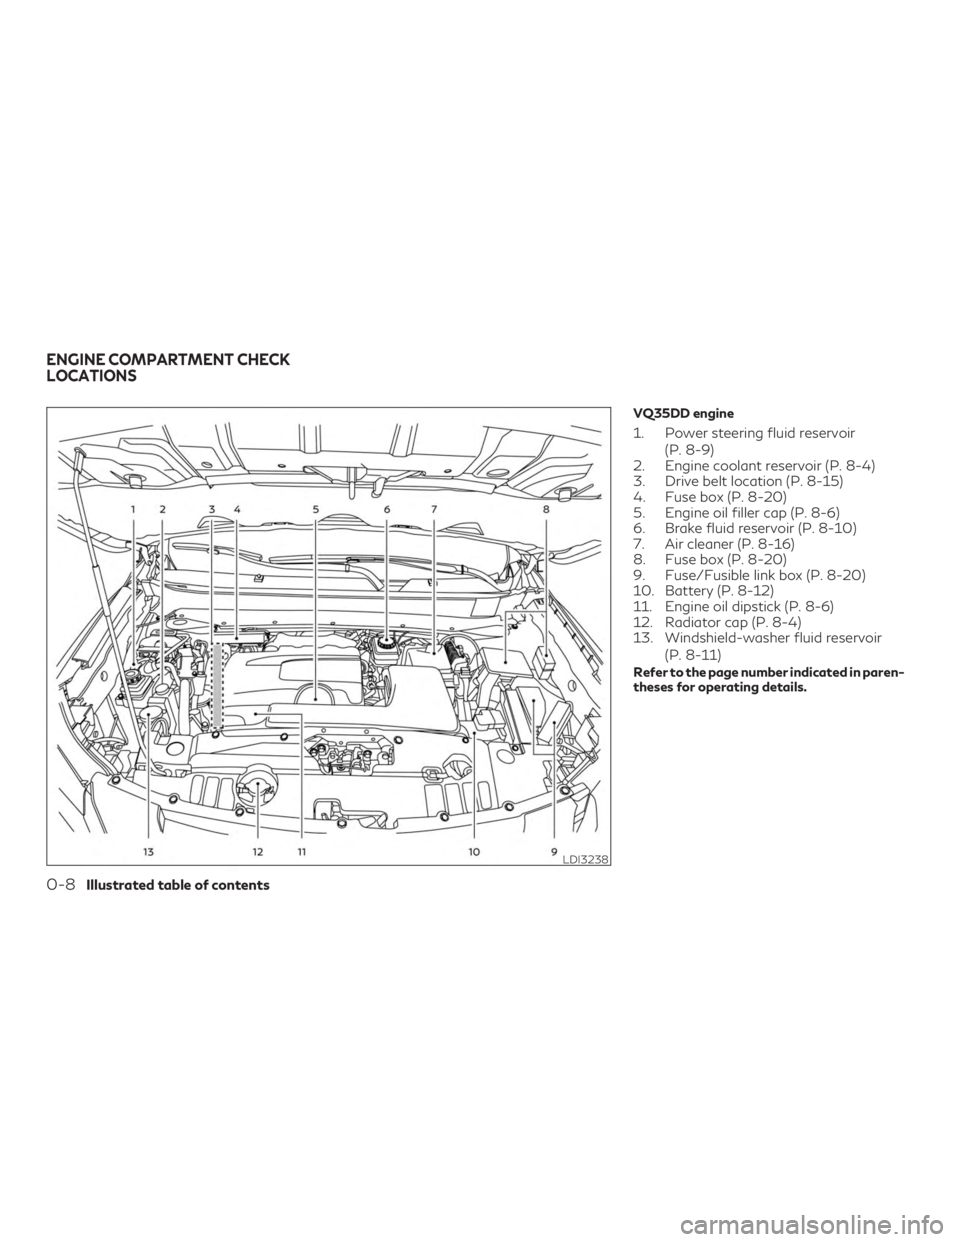 INFINITI QX60 2019 User Guide VQ35DD engine
1. Power steering fluid reservoir(P. 8-9)
2. Engine coolant reservoir (P. 8-4)
3. Drive belt location (P. 8-15)
4. Fuse box (P. 8-20)
5. Engine oil filler cap (P. 8-6)
6. Brake fluid res